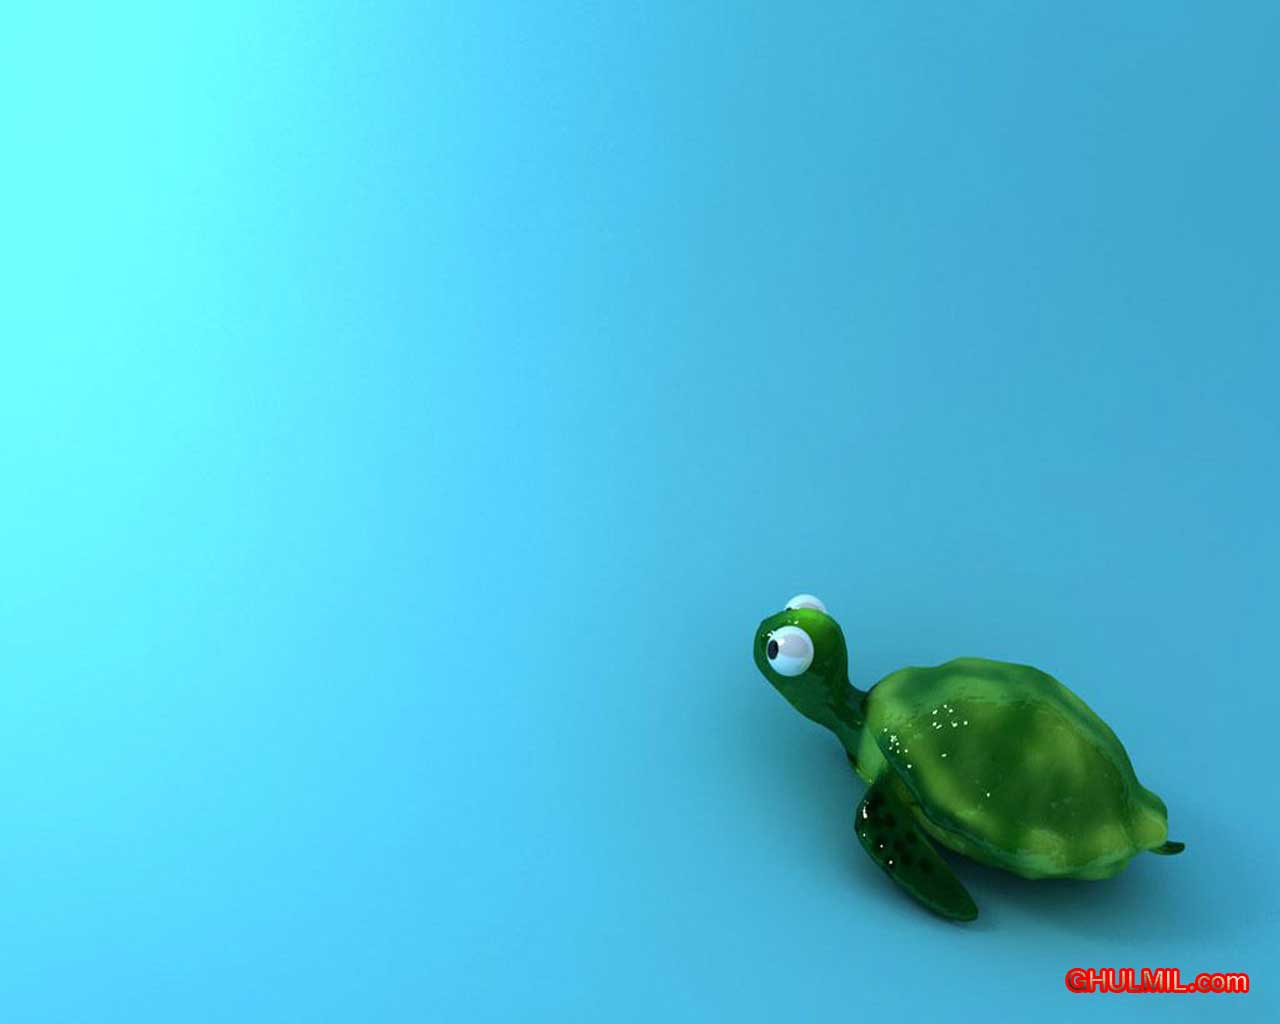 Wallpaper For > Cute Turtle Wallpaper